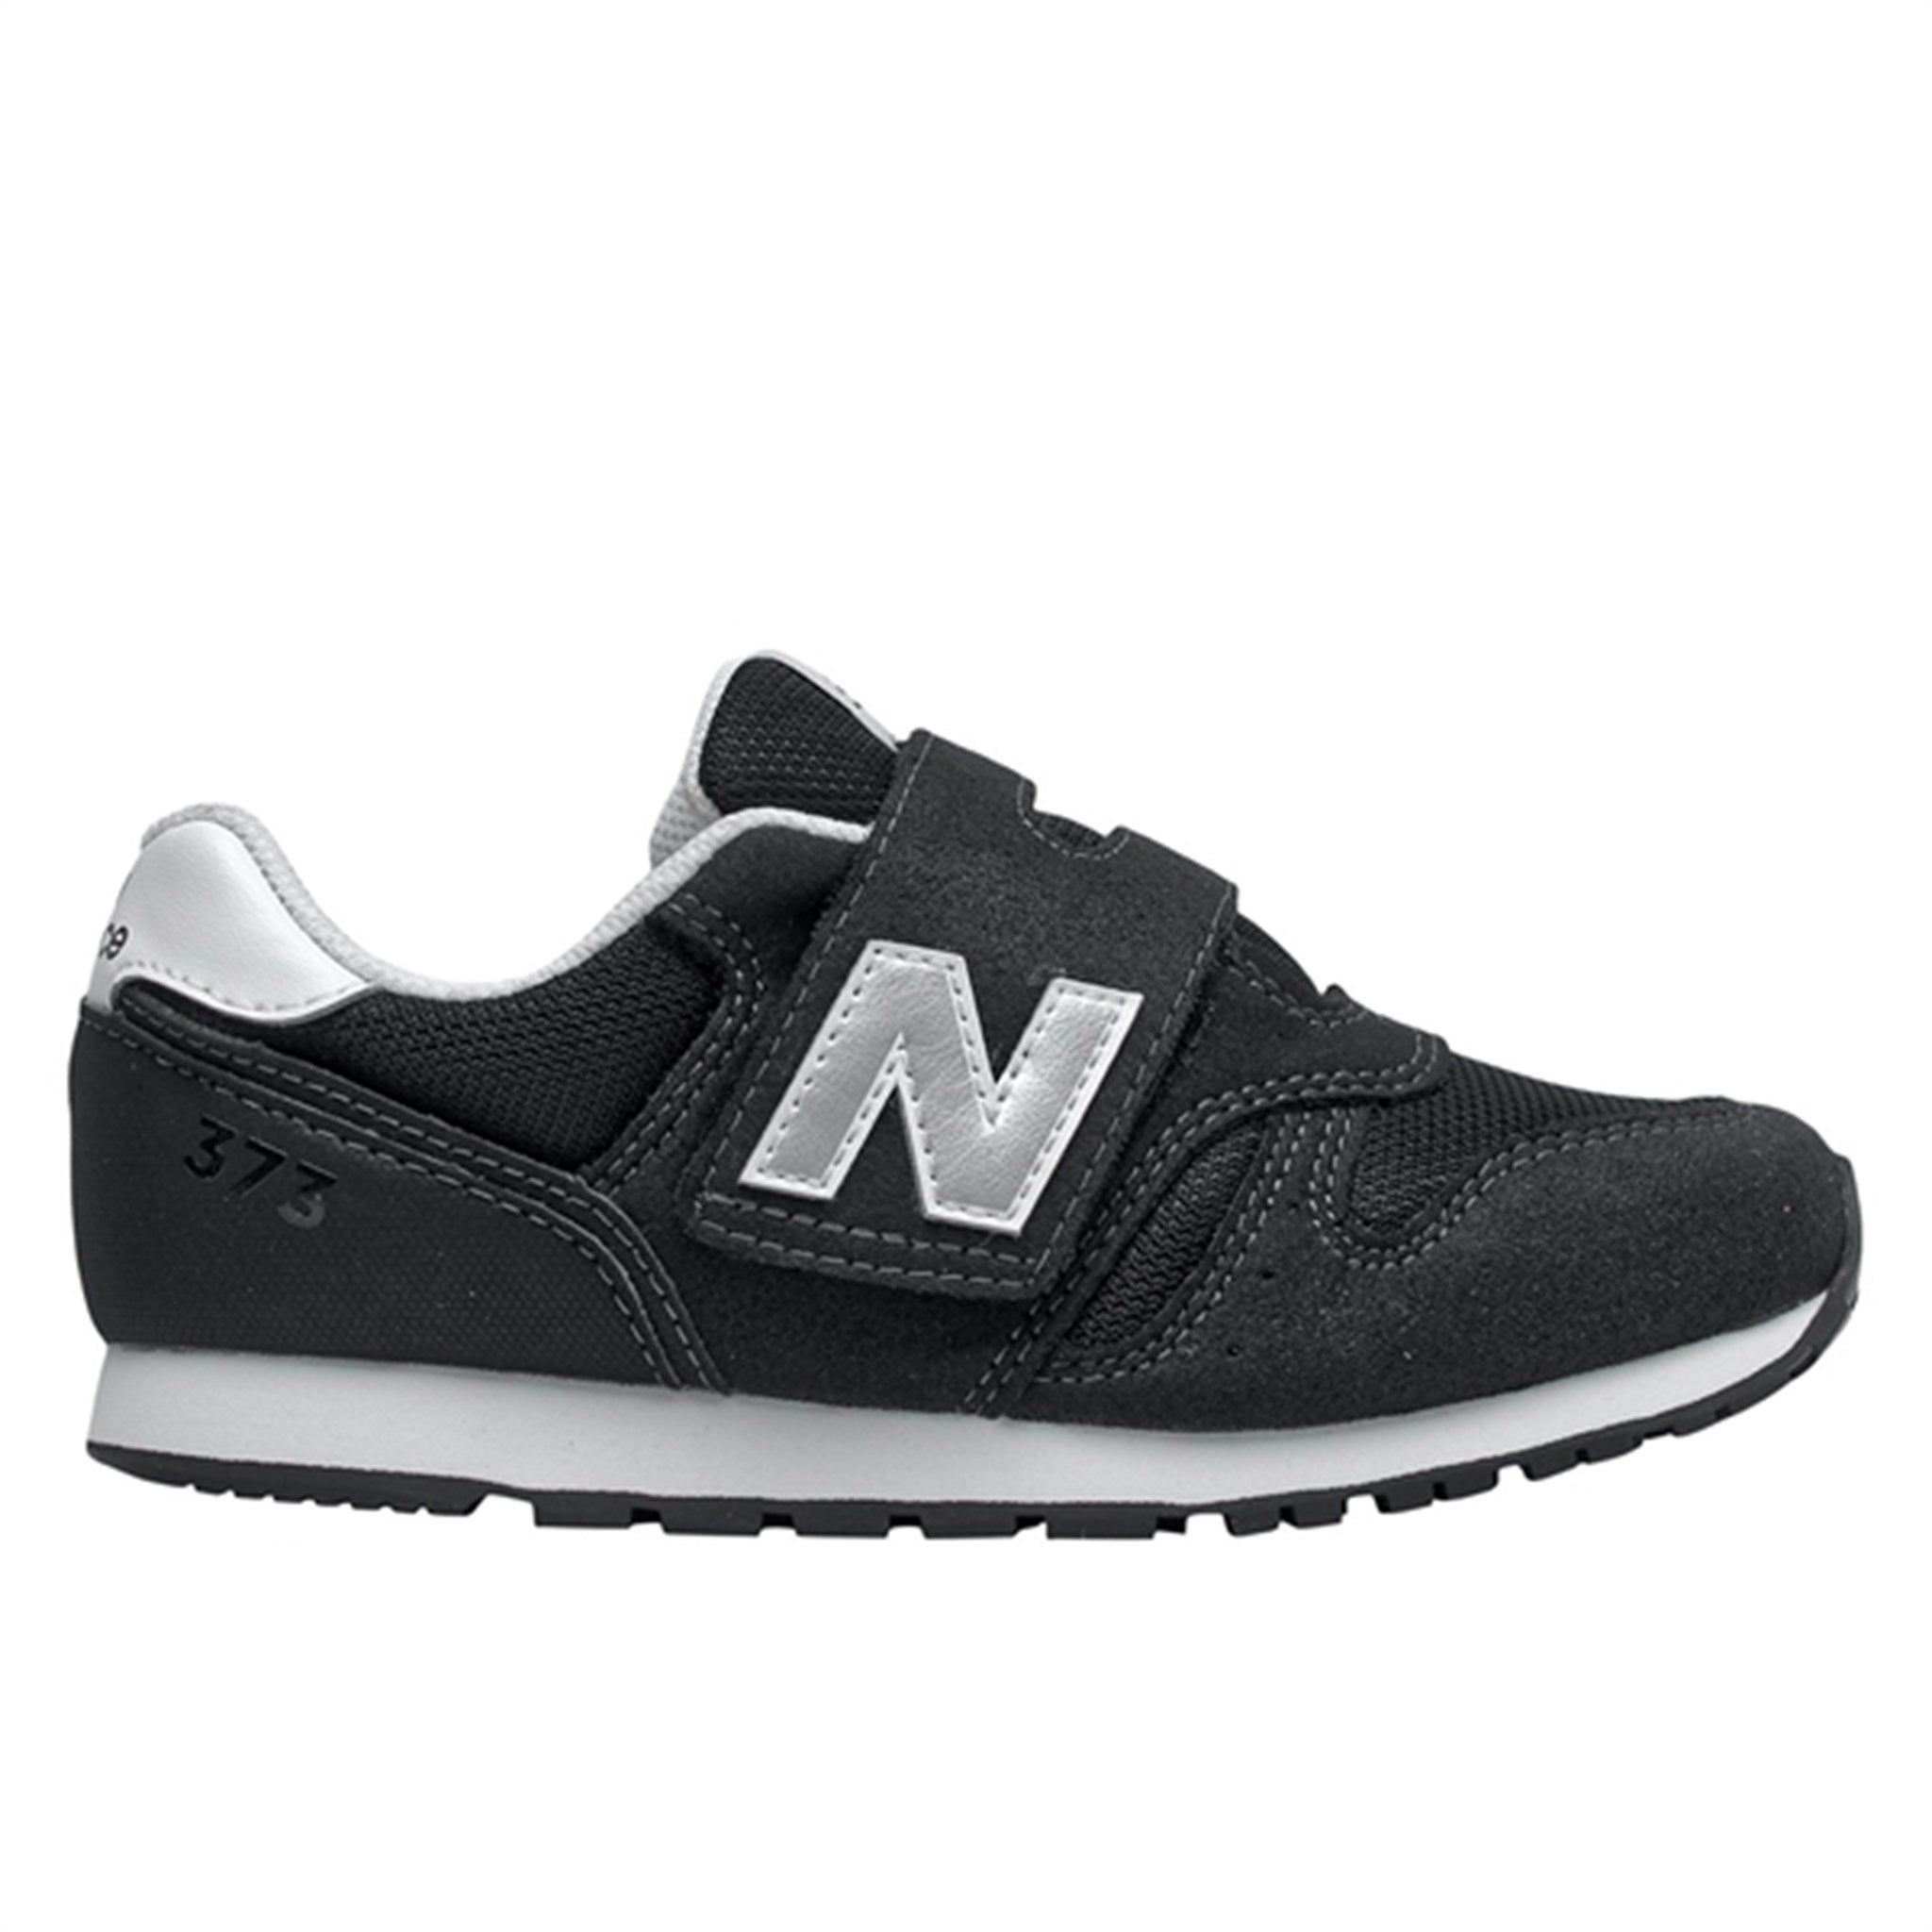 New Balance 373 Black White Sneakers